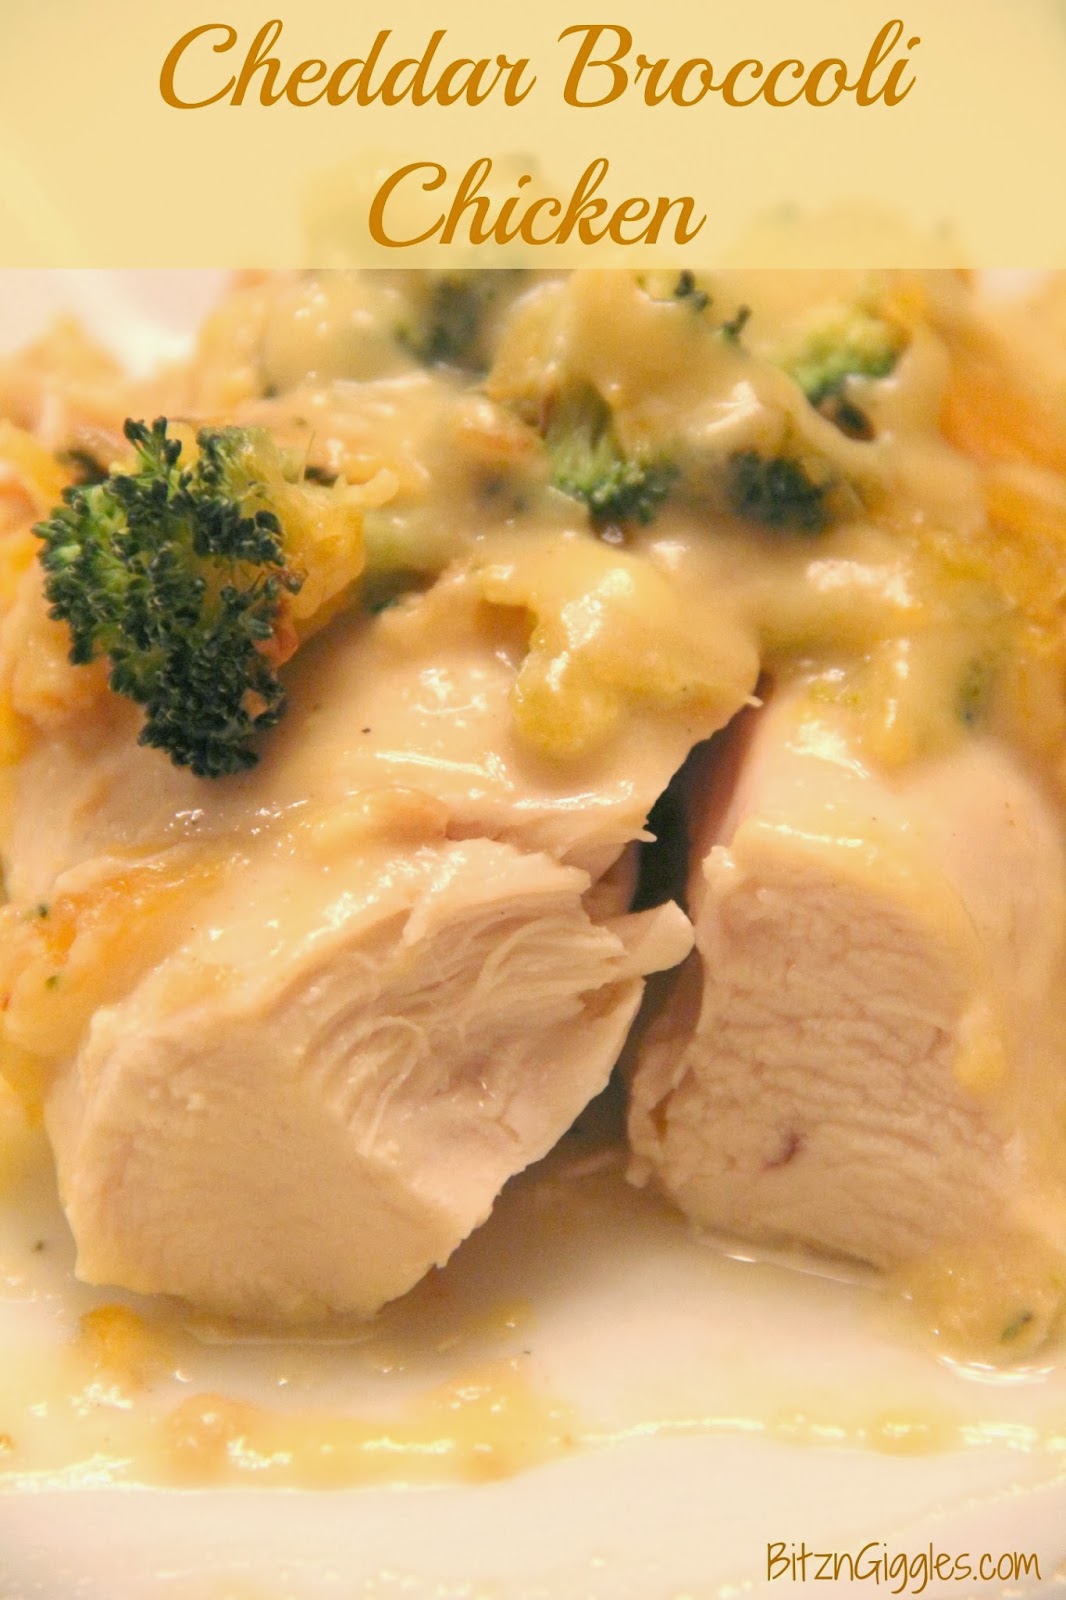 https://www.bitzngiggles.com/2014/02/cheddar-broccoli-chicken.html